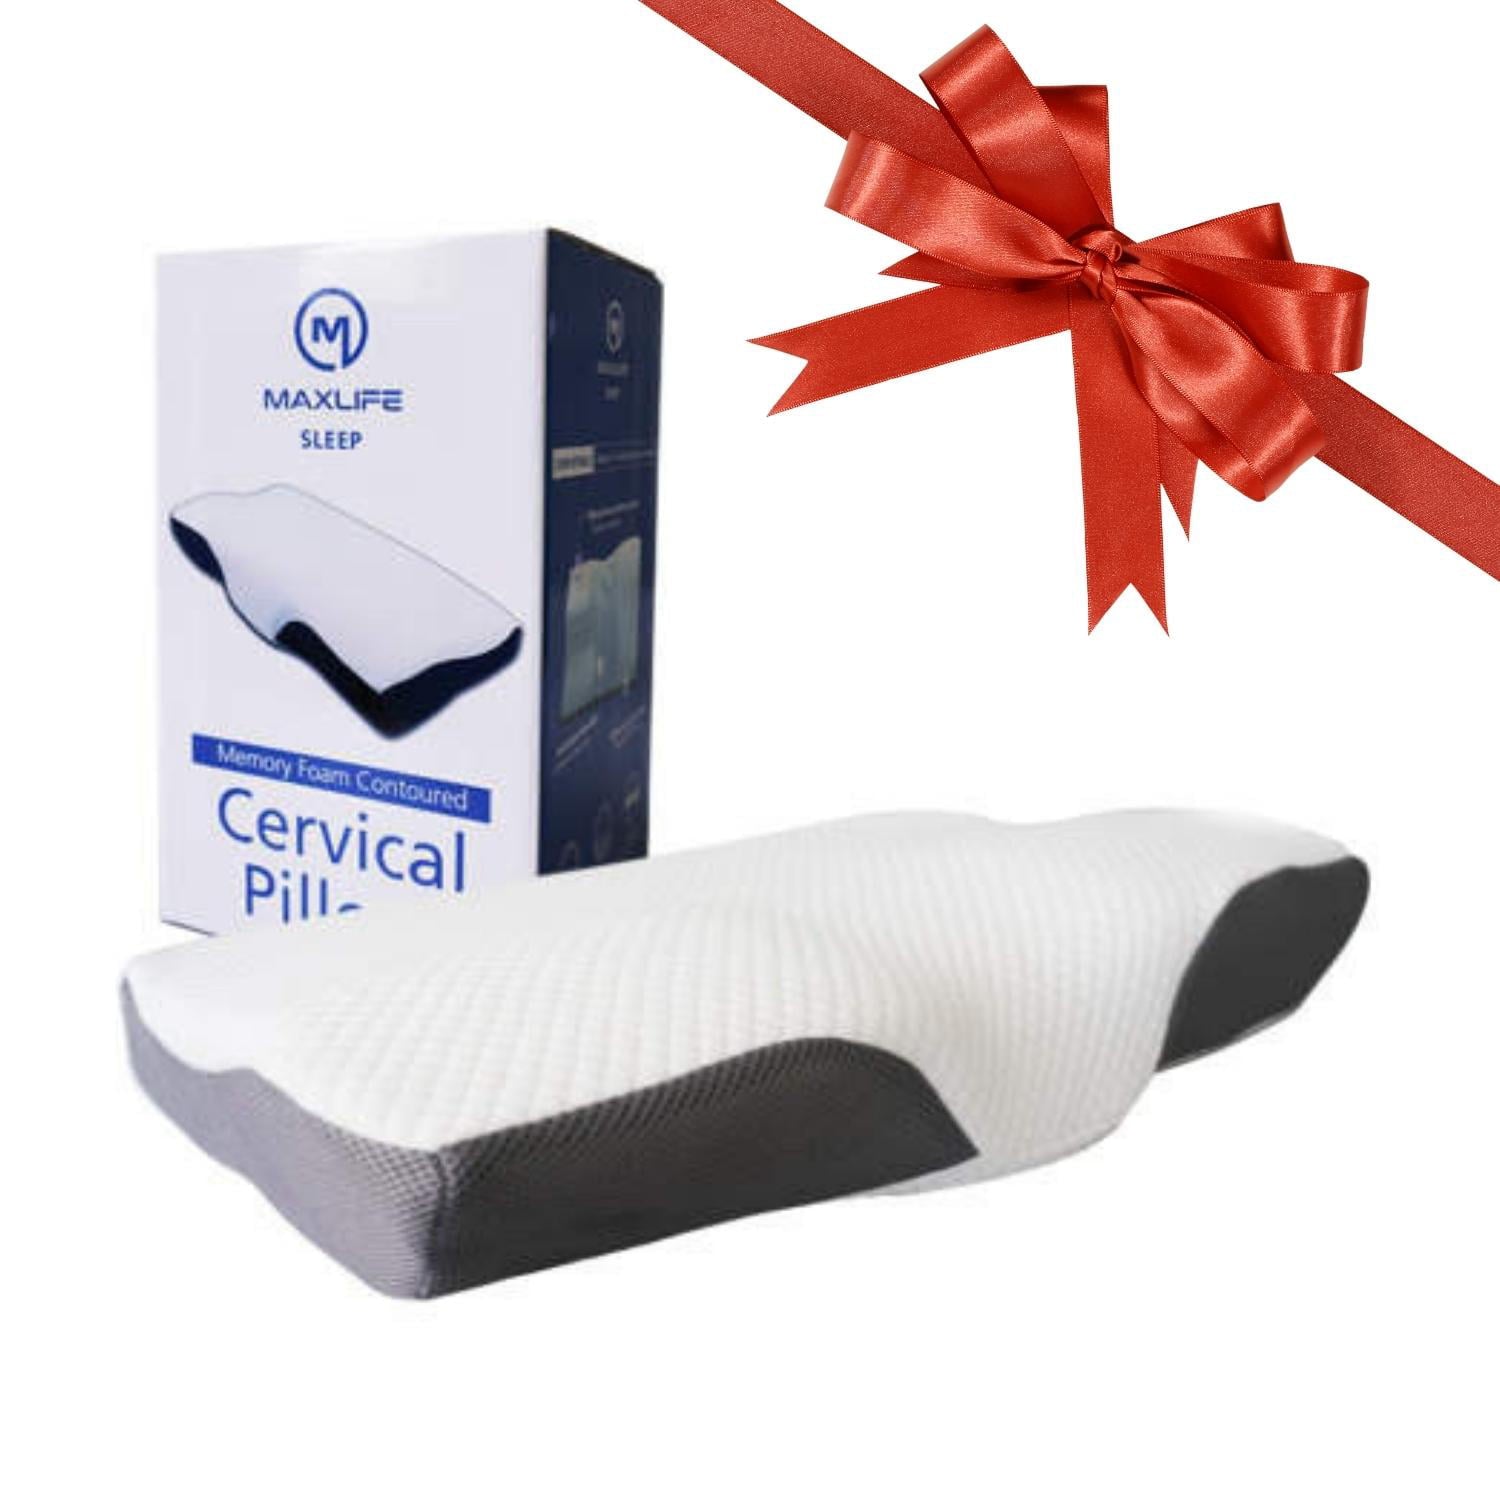 Maxlife Memory Foam Contoured Cervical Pillow - Orthopedic Pillows for Neck Pain